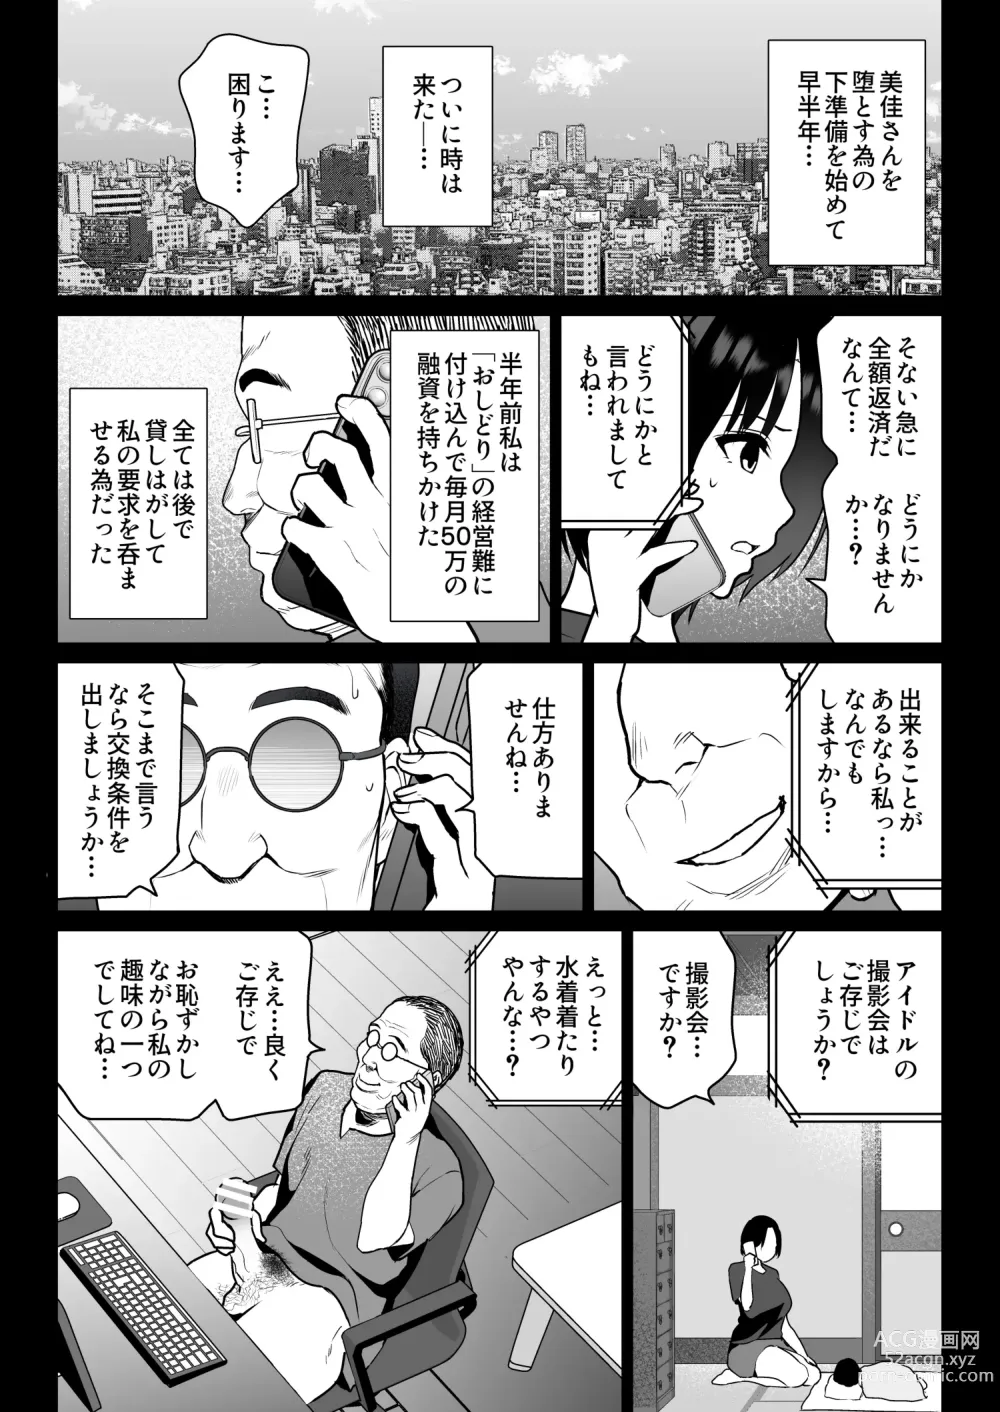 Page 7 of doujinshi Oshidori Fuufu Yakitorare